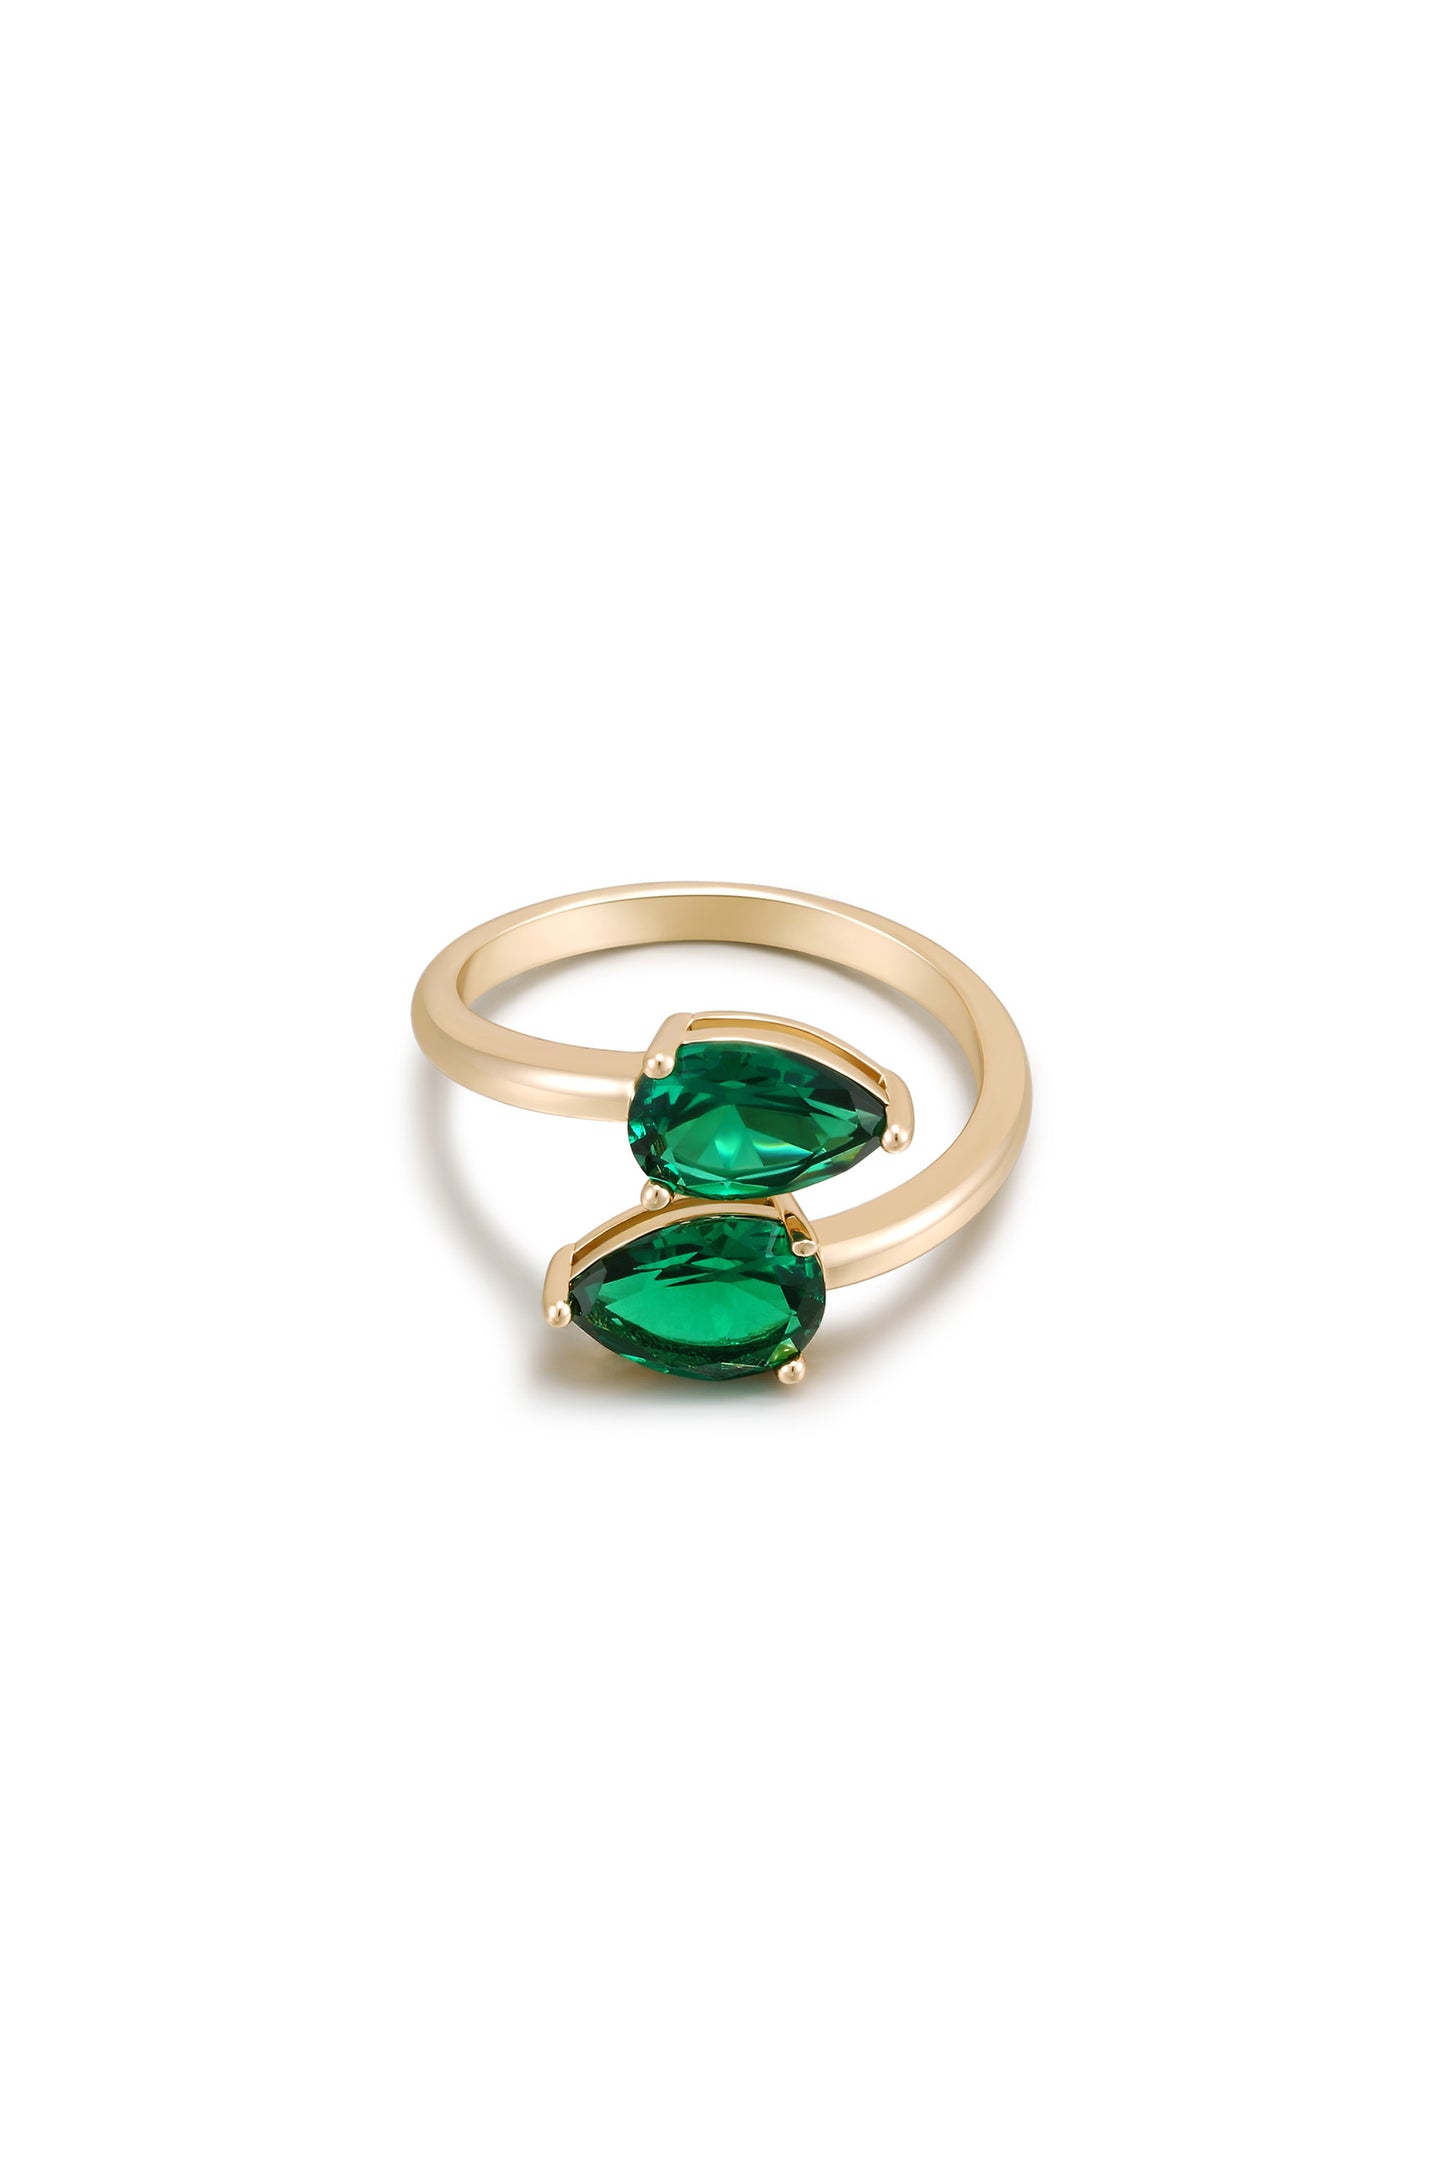 Crystal Teardrop Wrap Ring in green